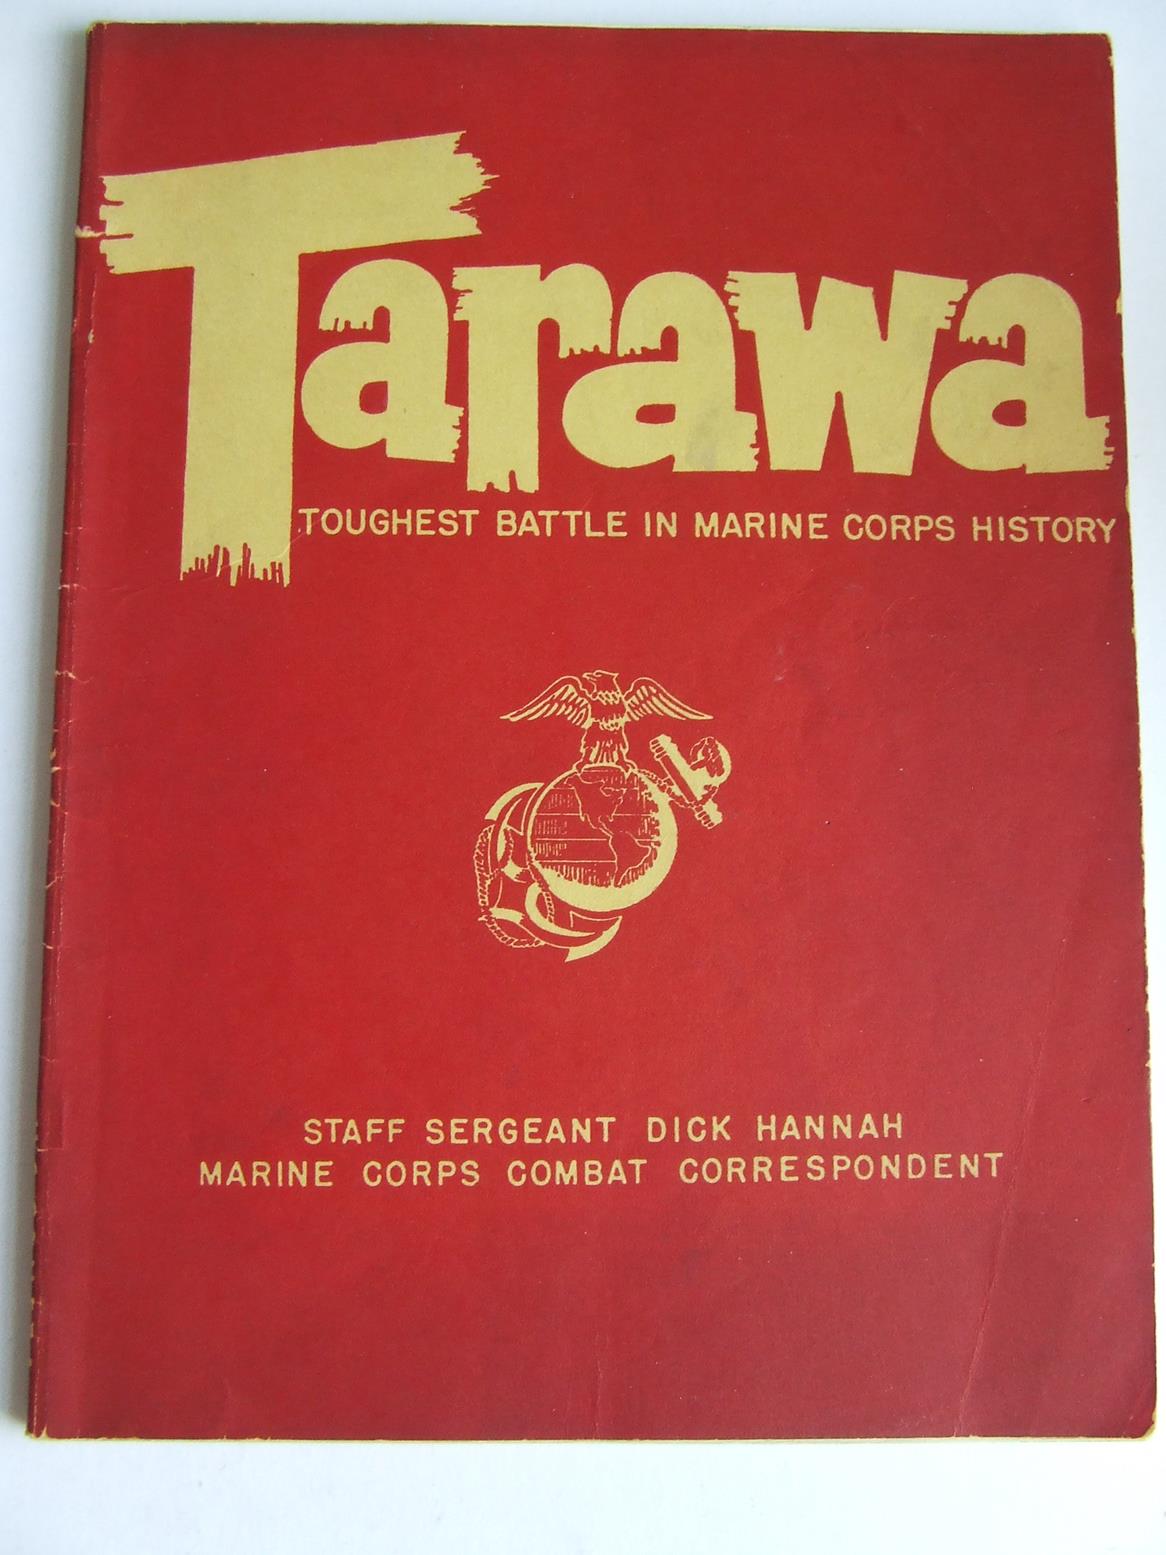 Tarawa, toughest battle in Marine Corps history